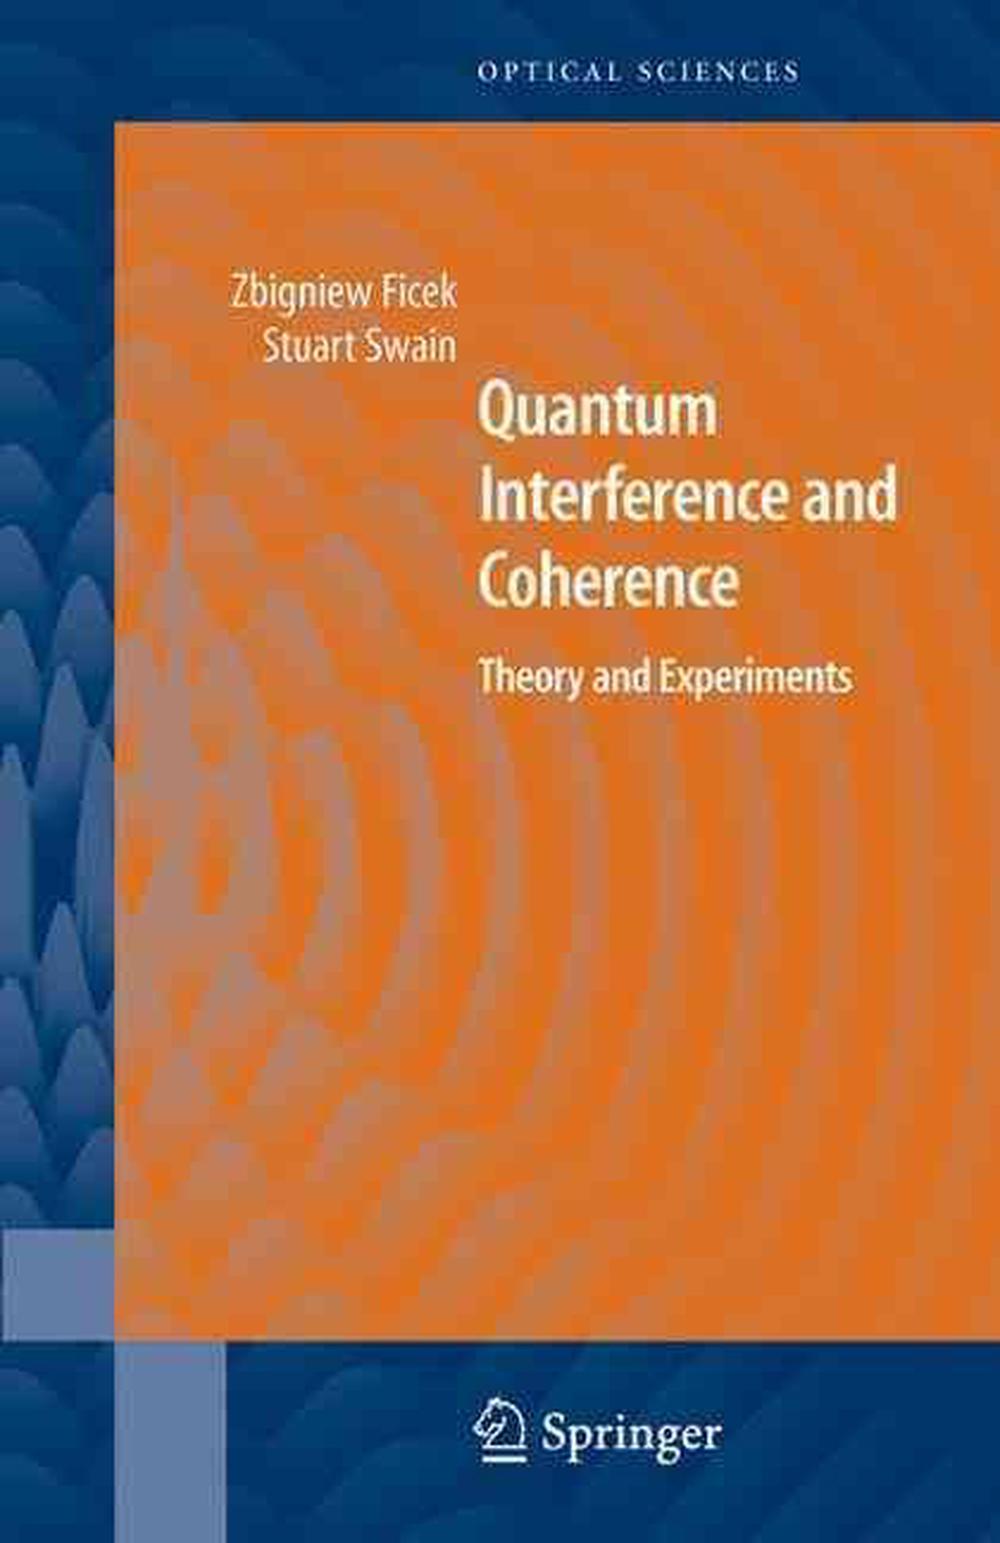 quantum coherence